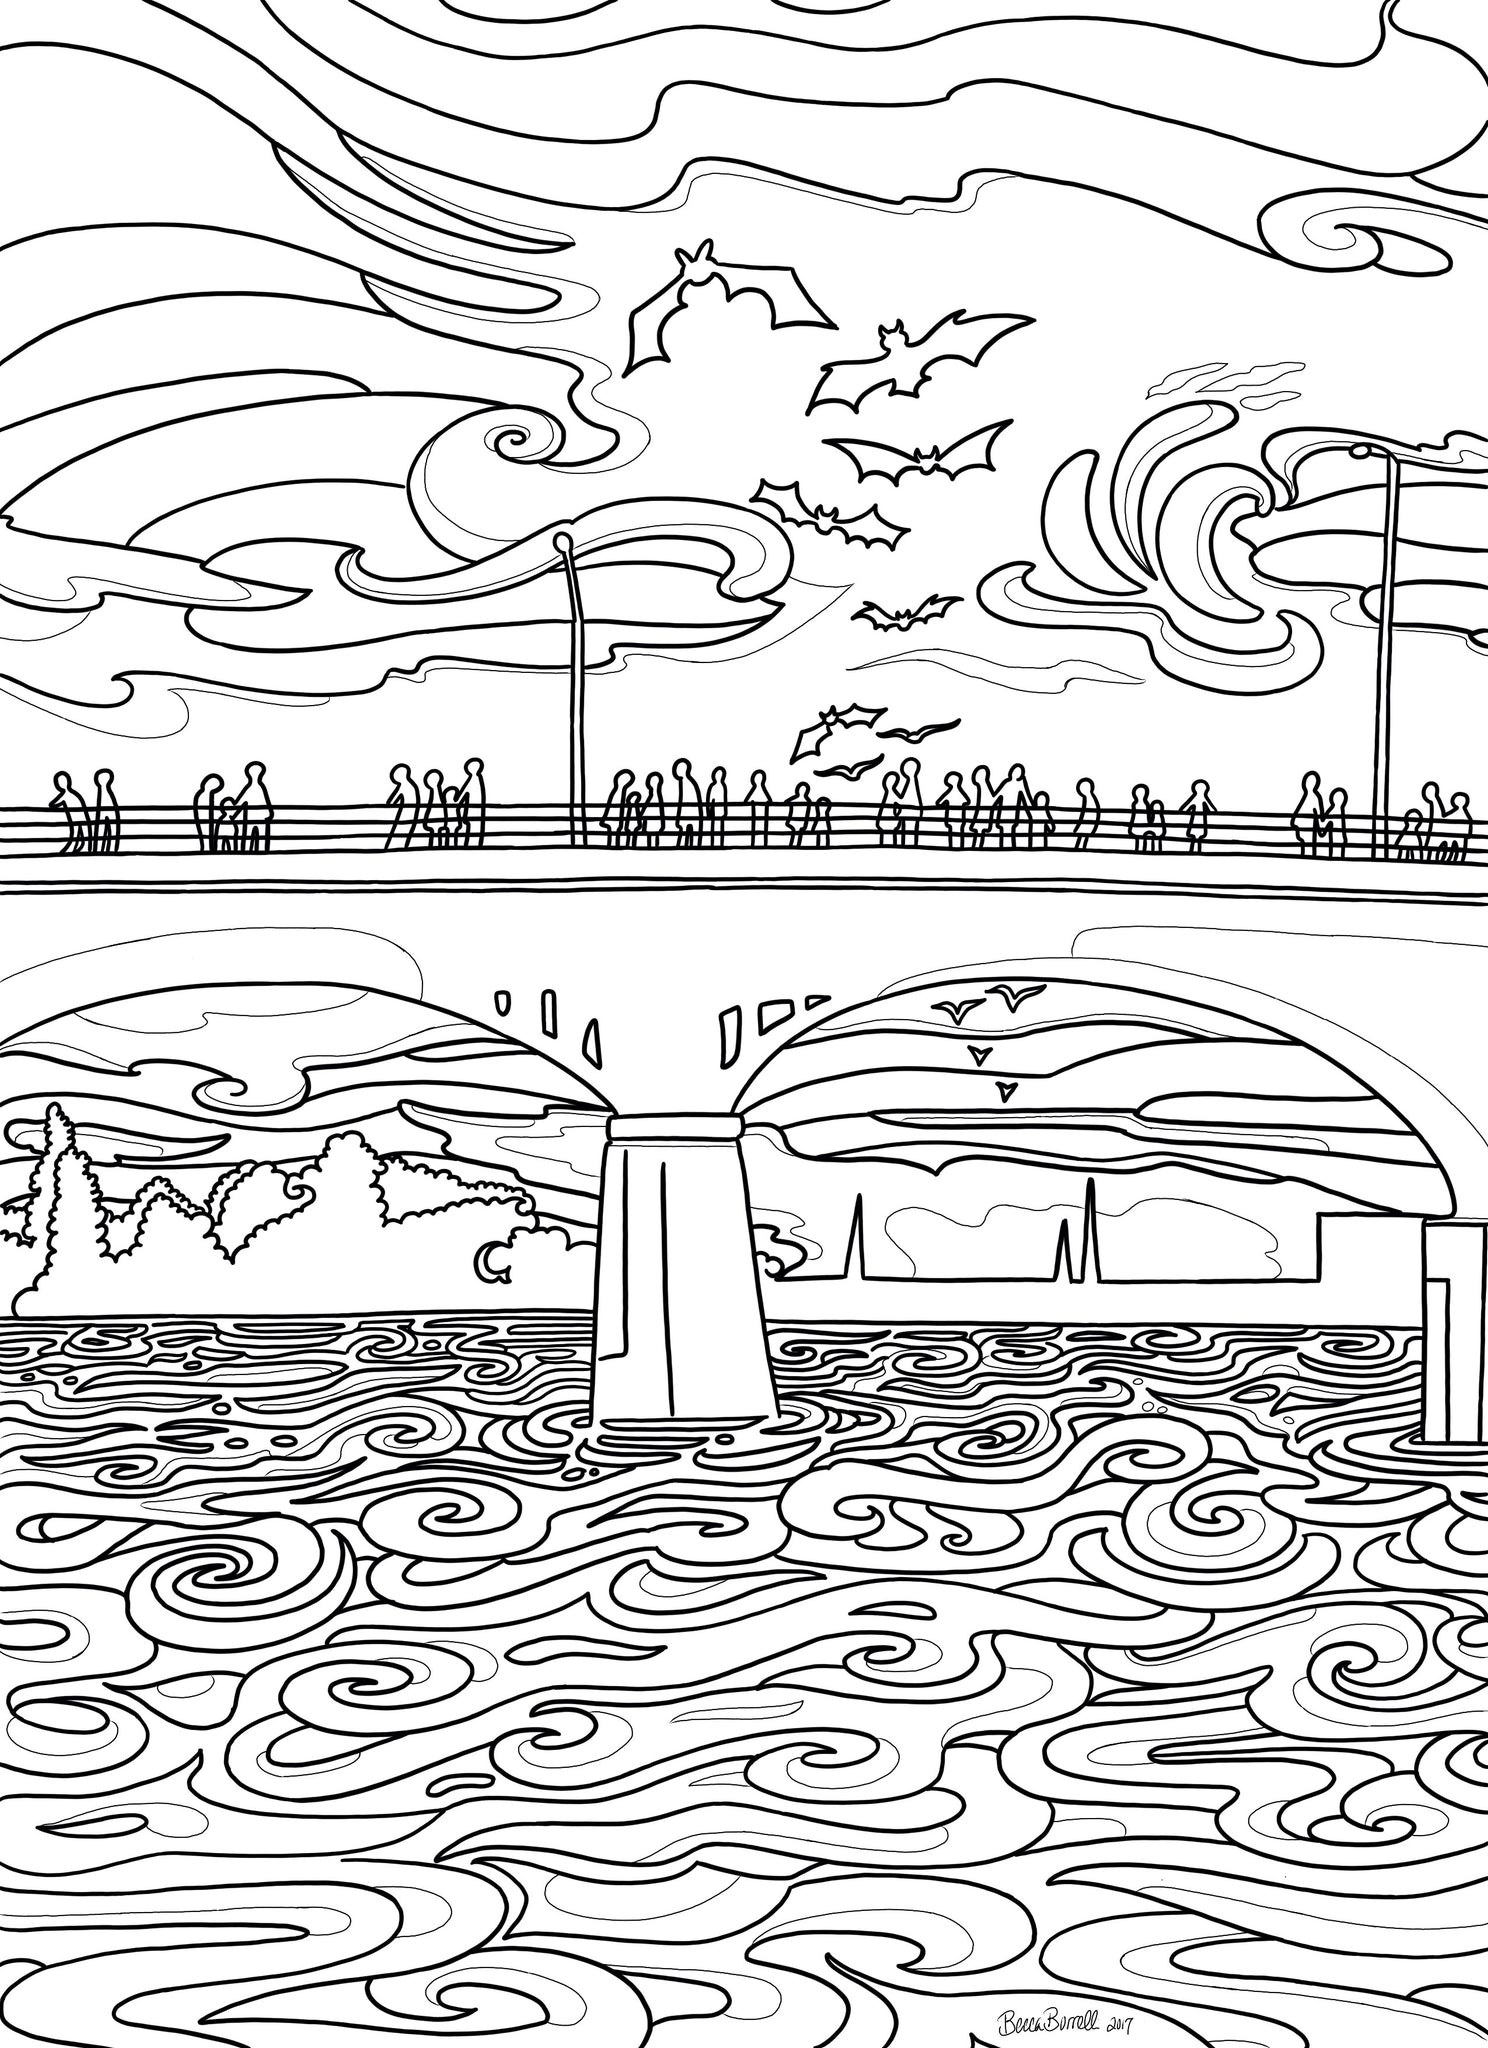 Austin Congress Bridge Coloring Page - Borrelli Illustrations